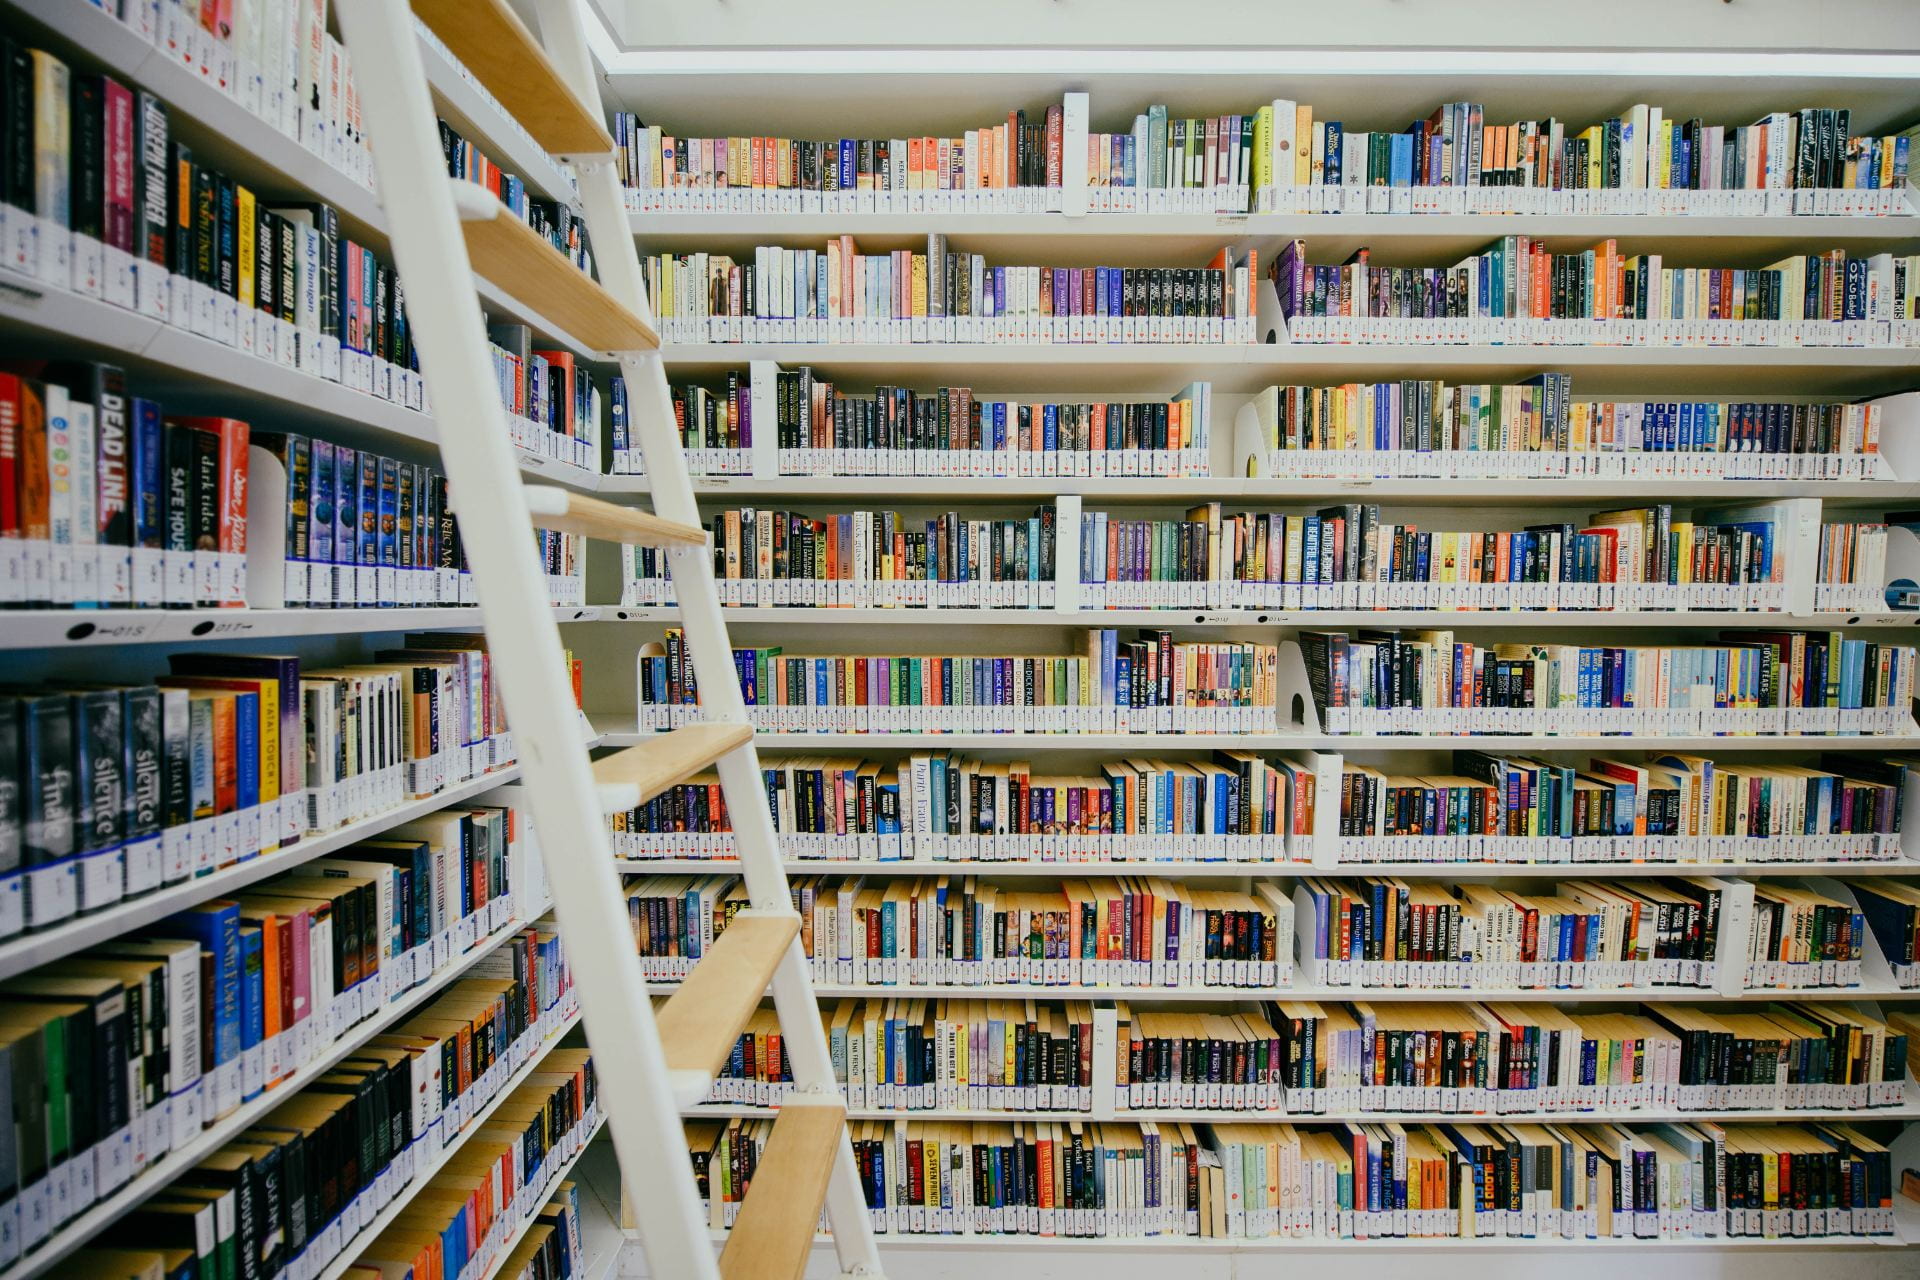 Shelves full of books in a library